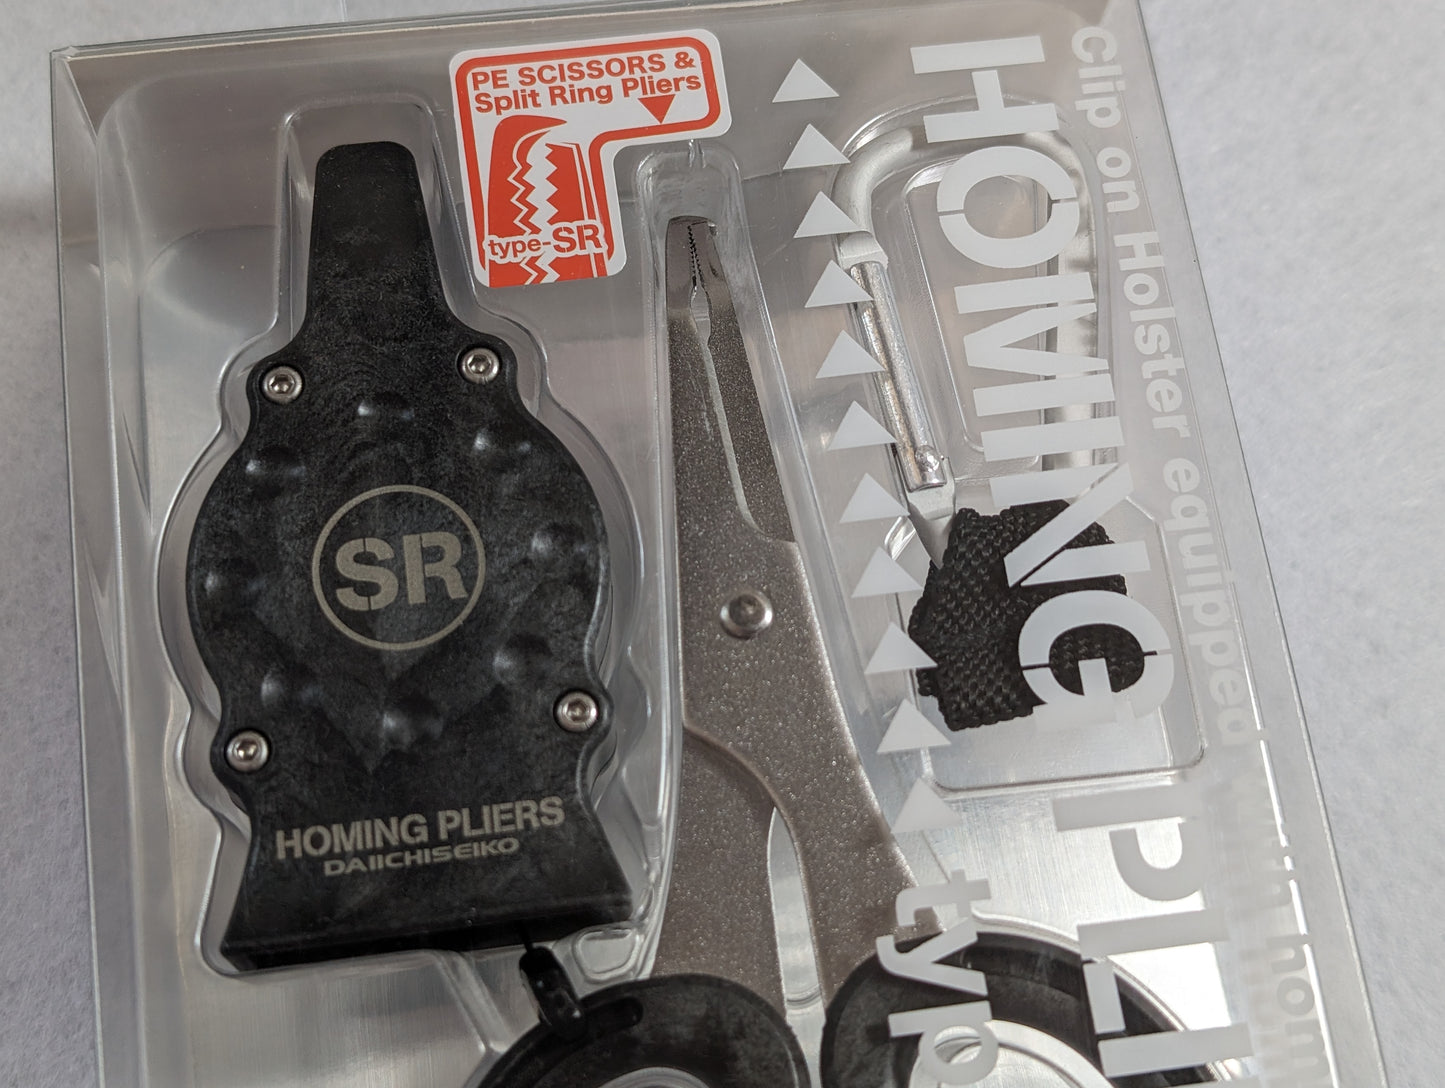 Split Ring Pliers | Daiichiseiko - Homing plier type SR